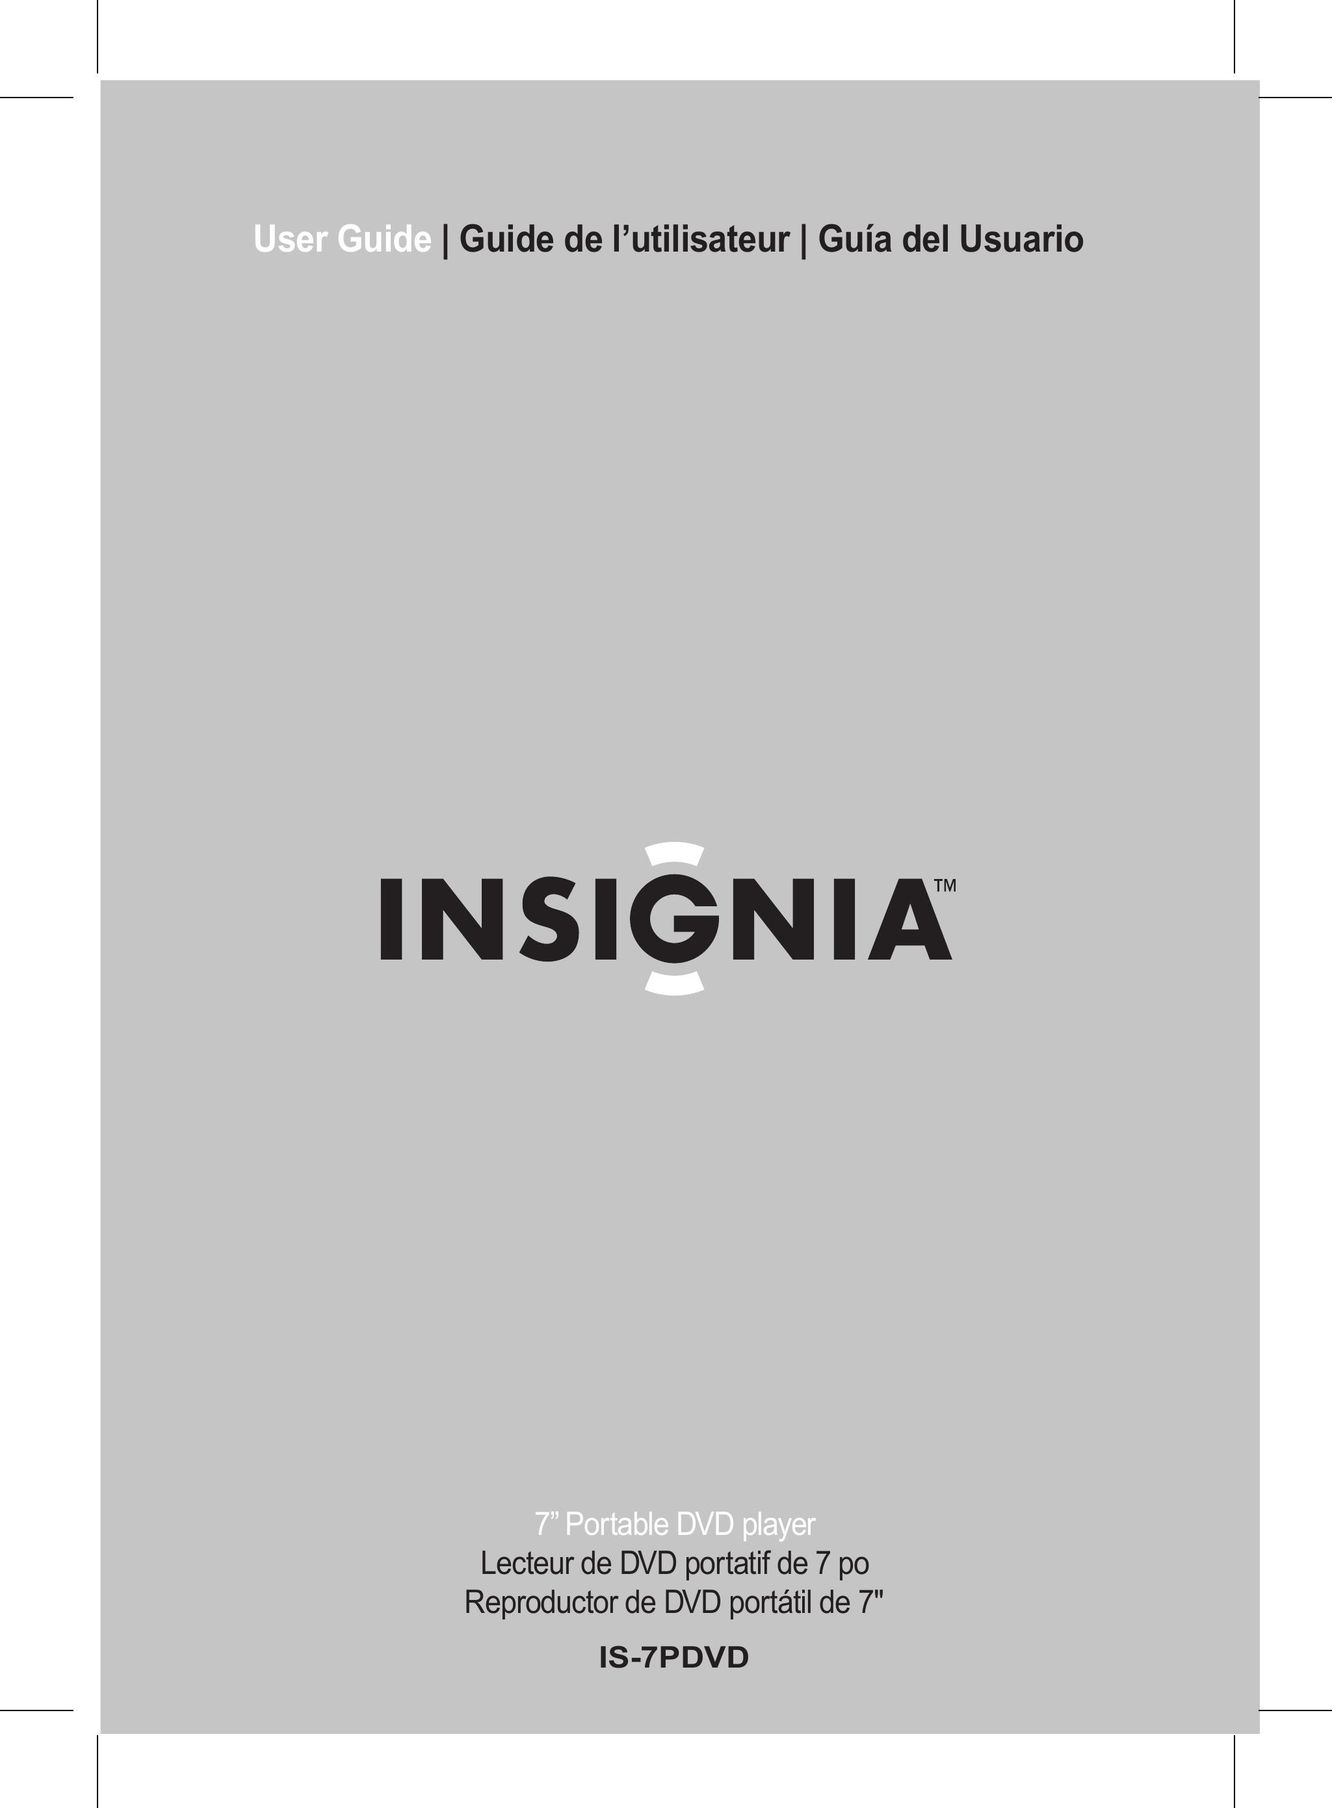 Insignia NS-7PDVD DVD Player User Manual